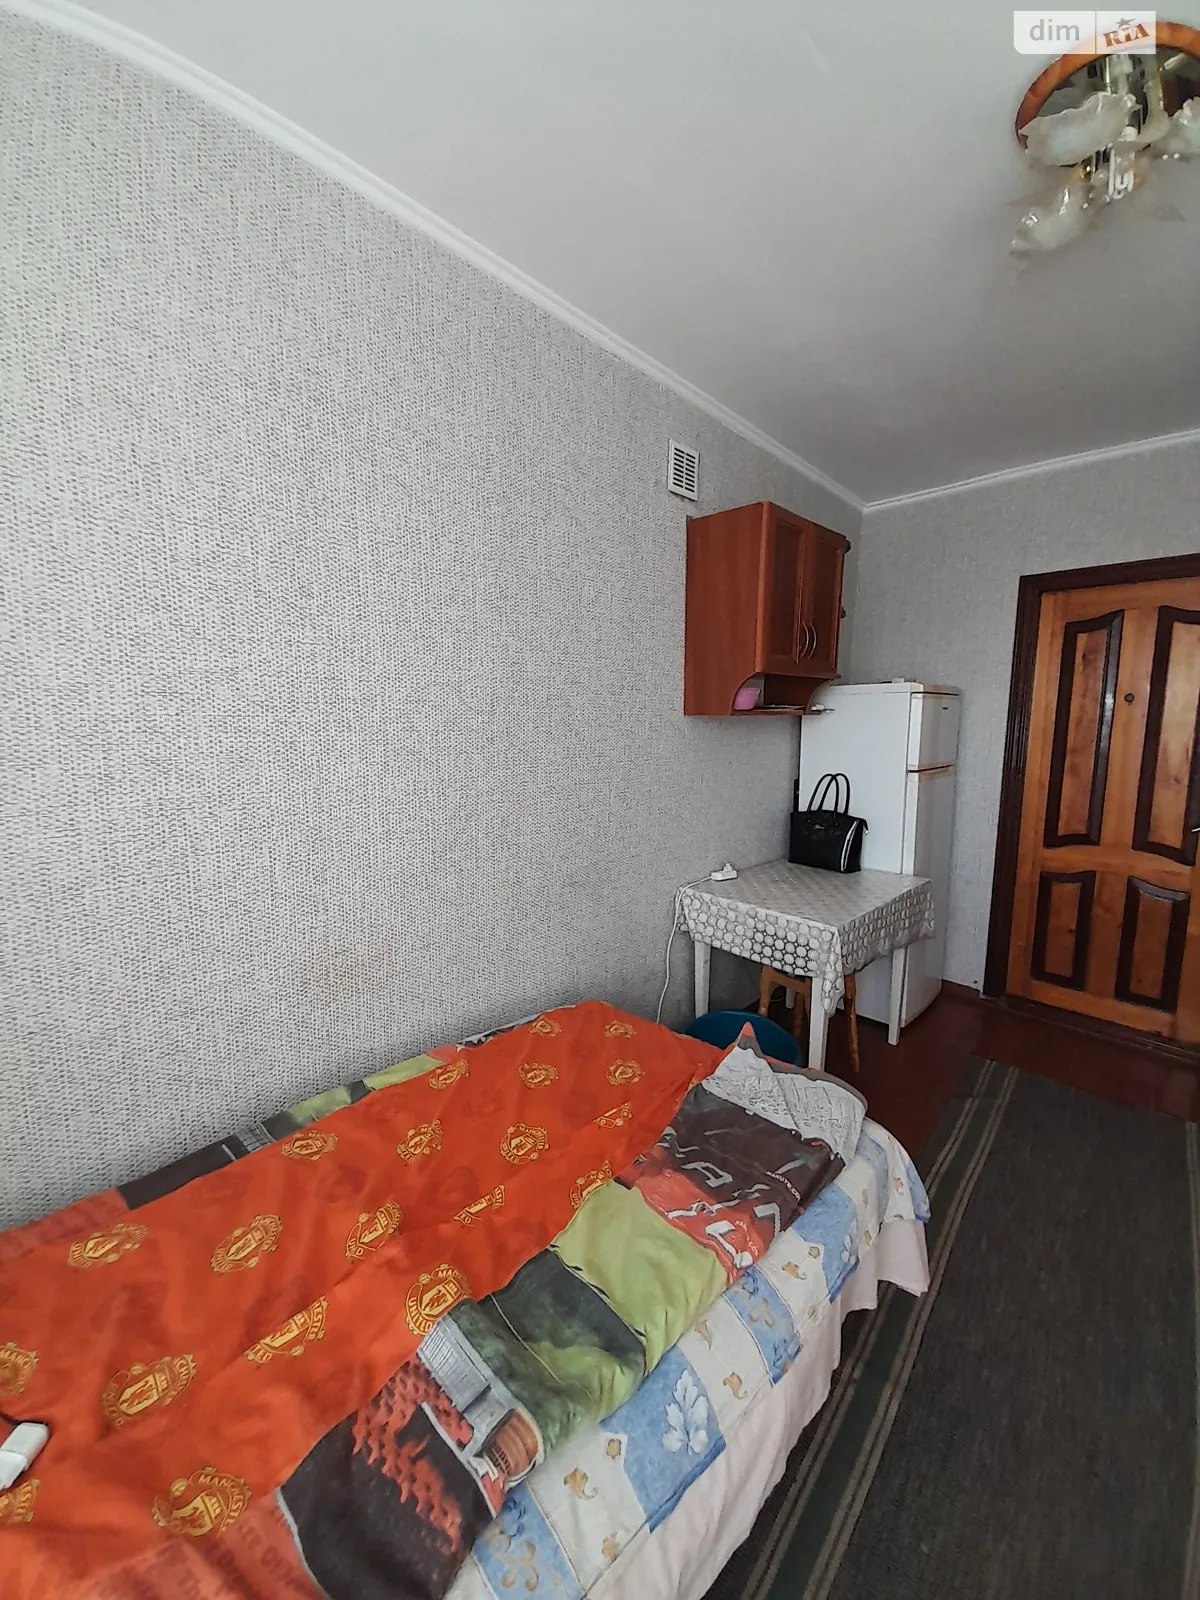 Продается комната 17 кв. м в Ровно - фото 2